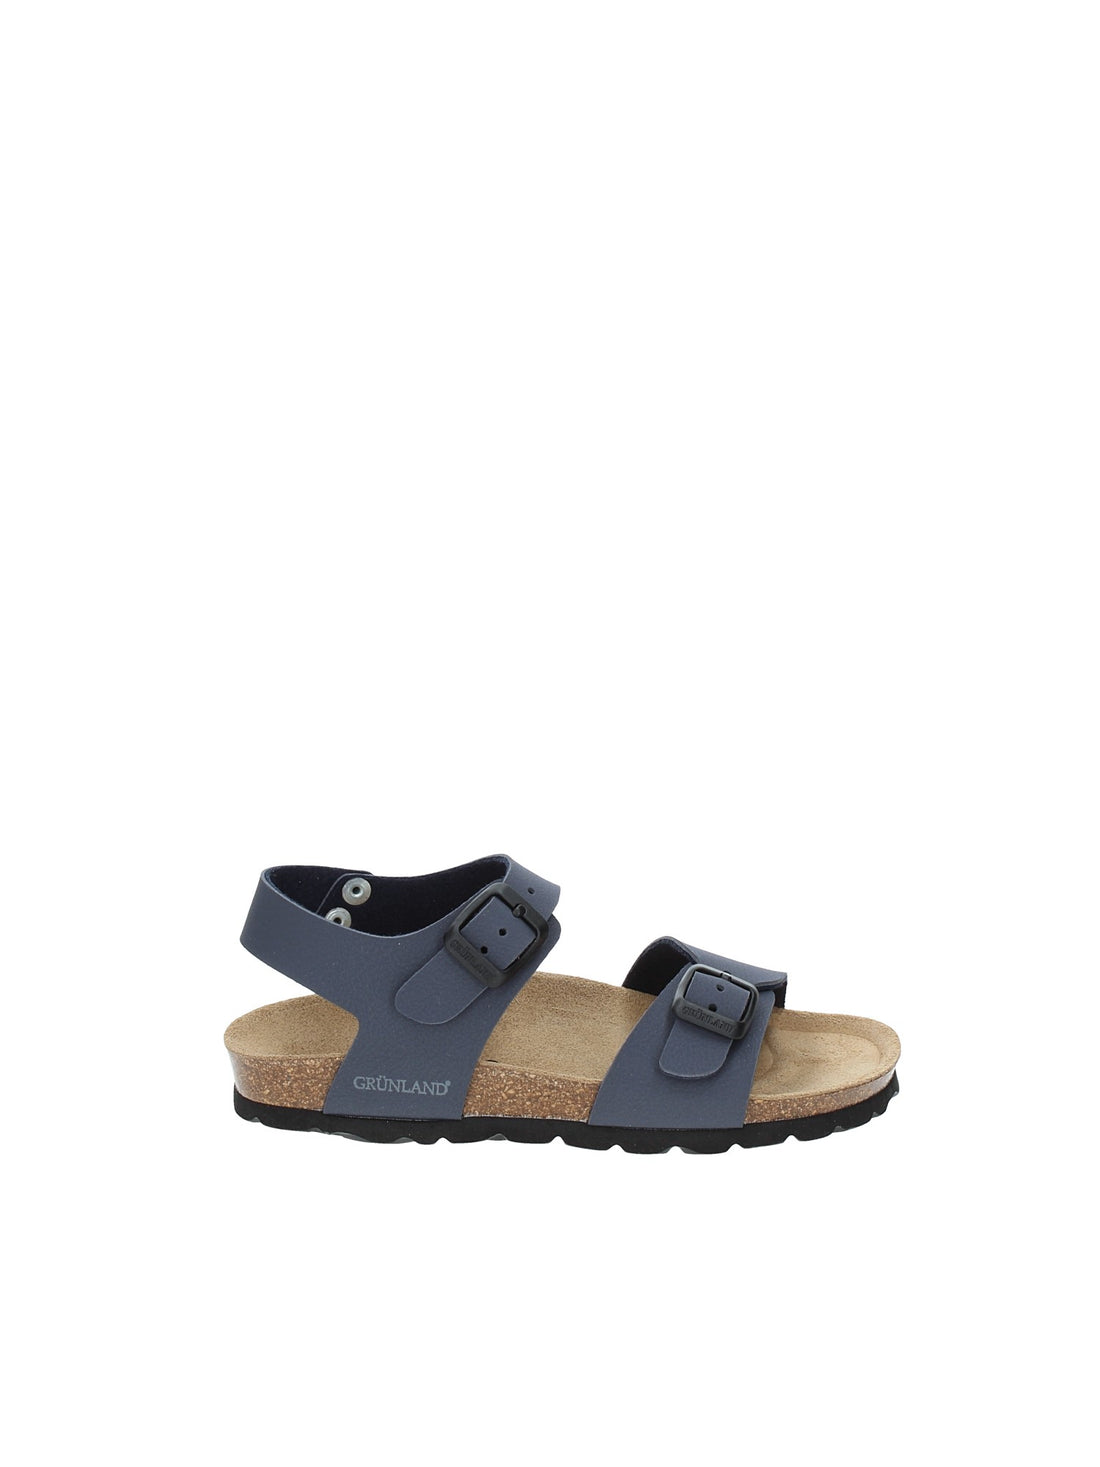 Grunland Junior Sandals SB0901